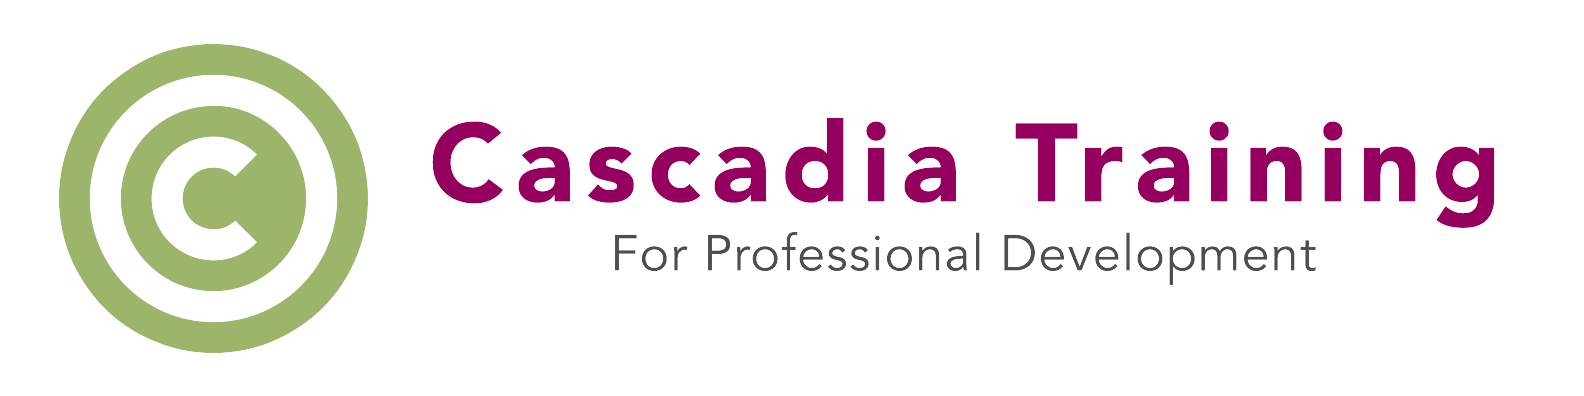 Cascadia Training for Professional Development Logo